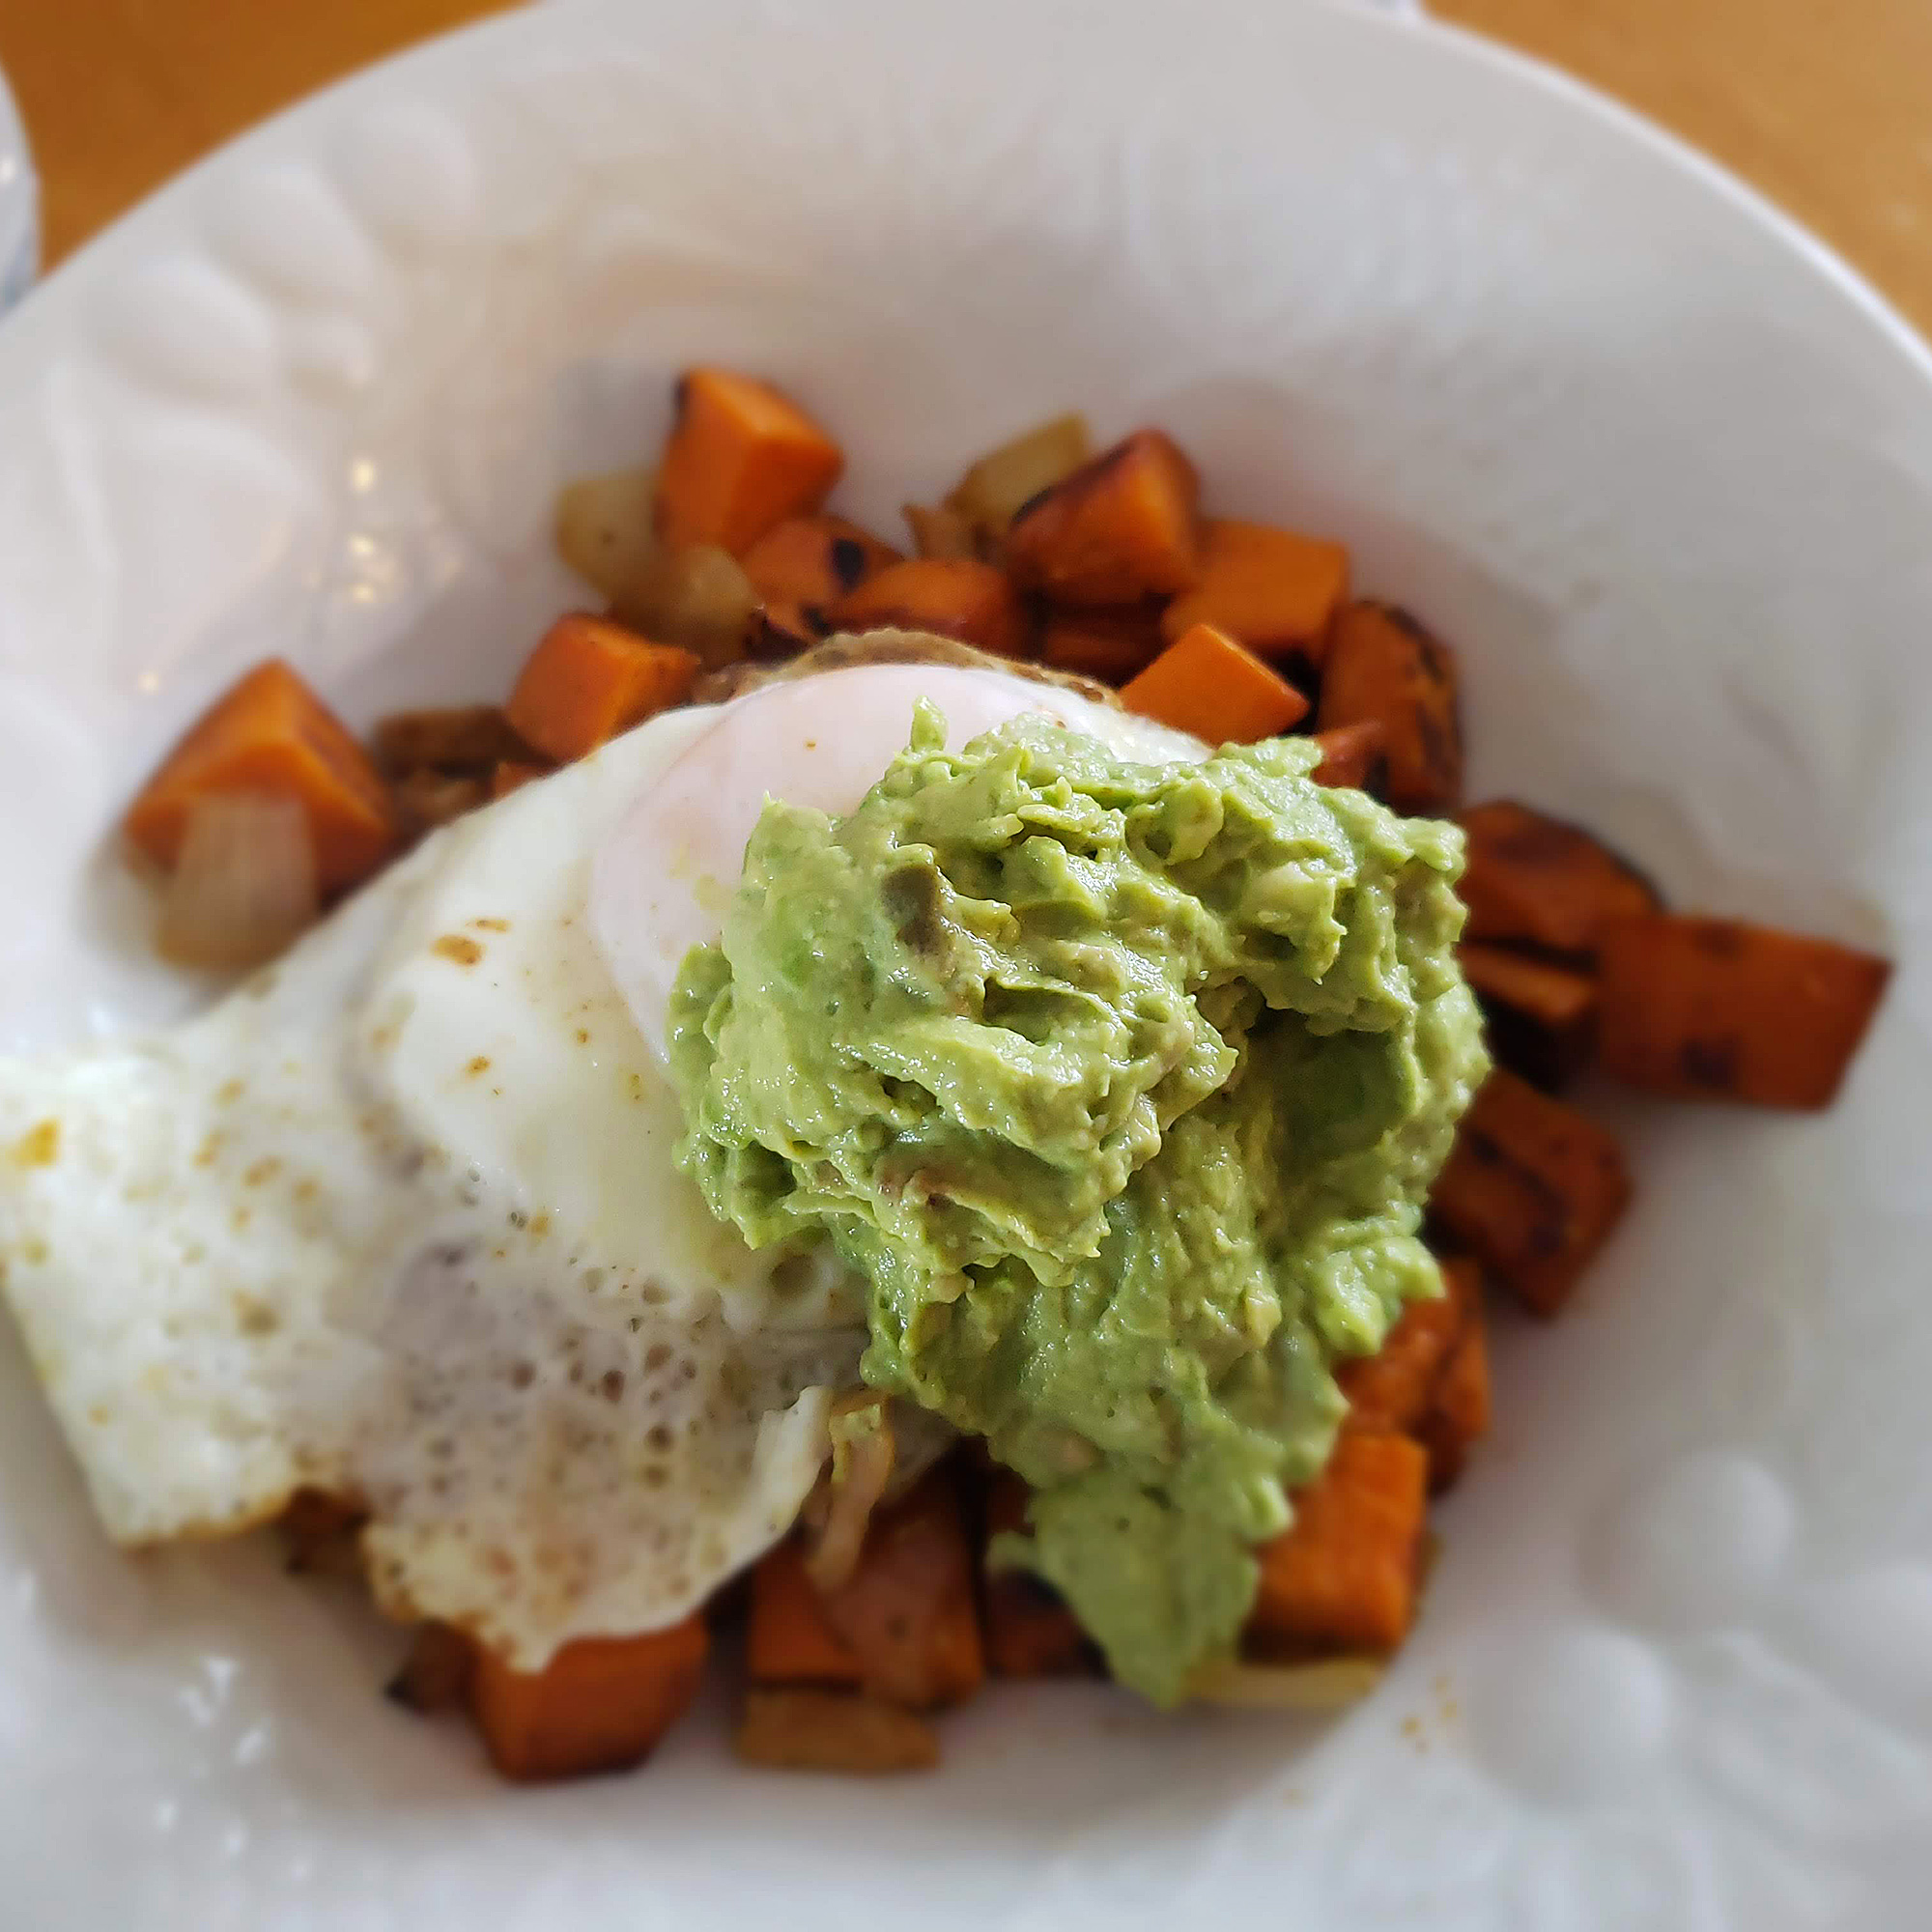 Sweet potato hash with fried egg and avocado aioli on a white plate